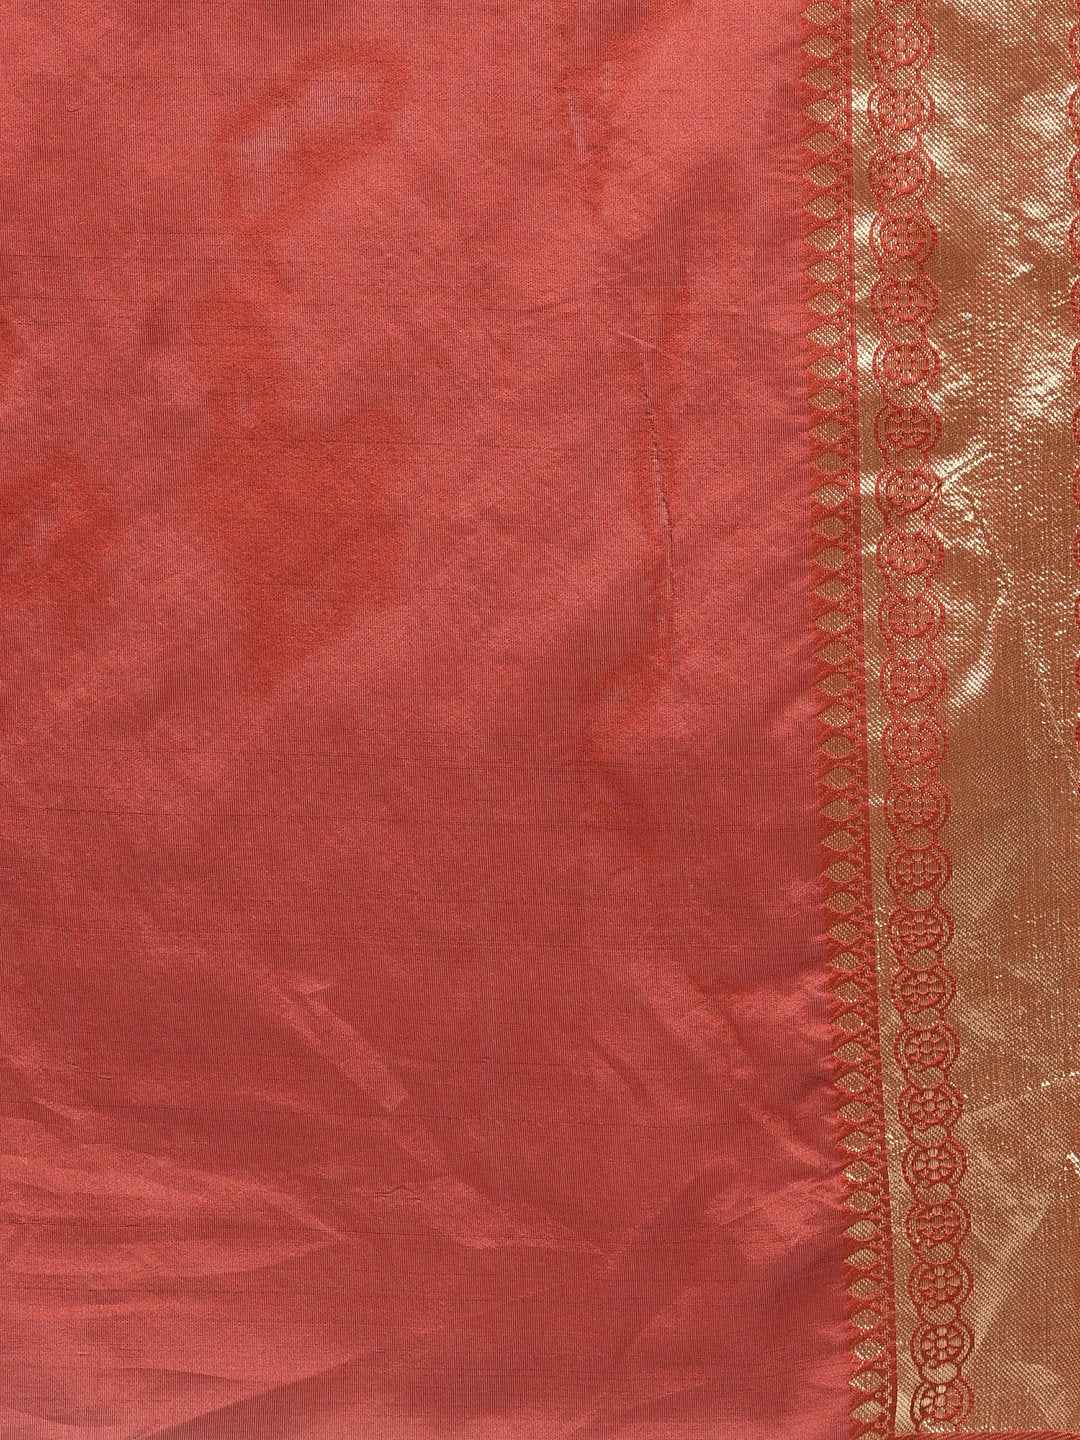 Handloom Saree In Rust Color